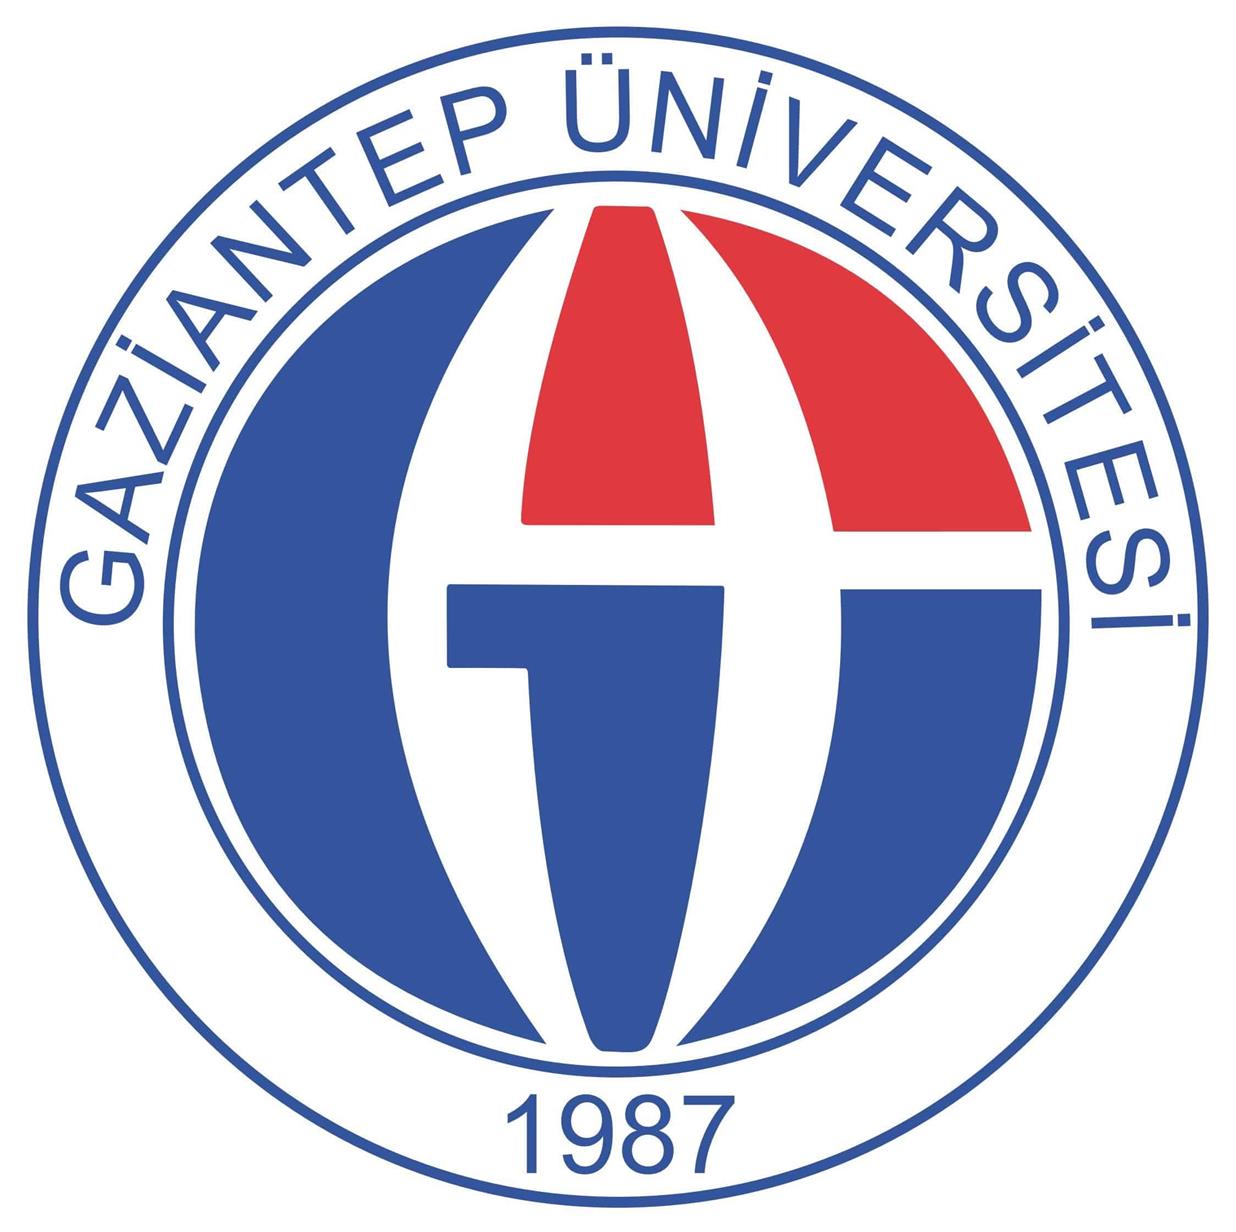 gaziantep universitesi logo1